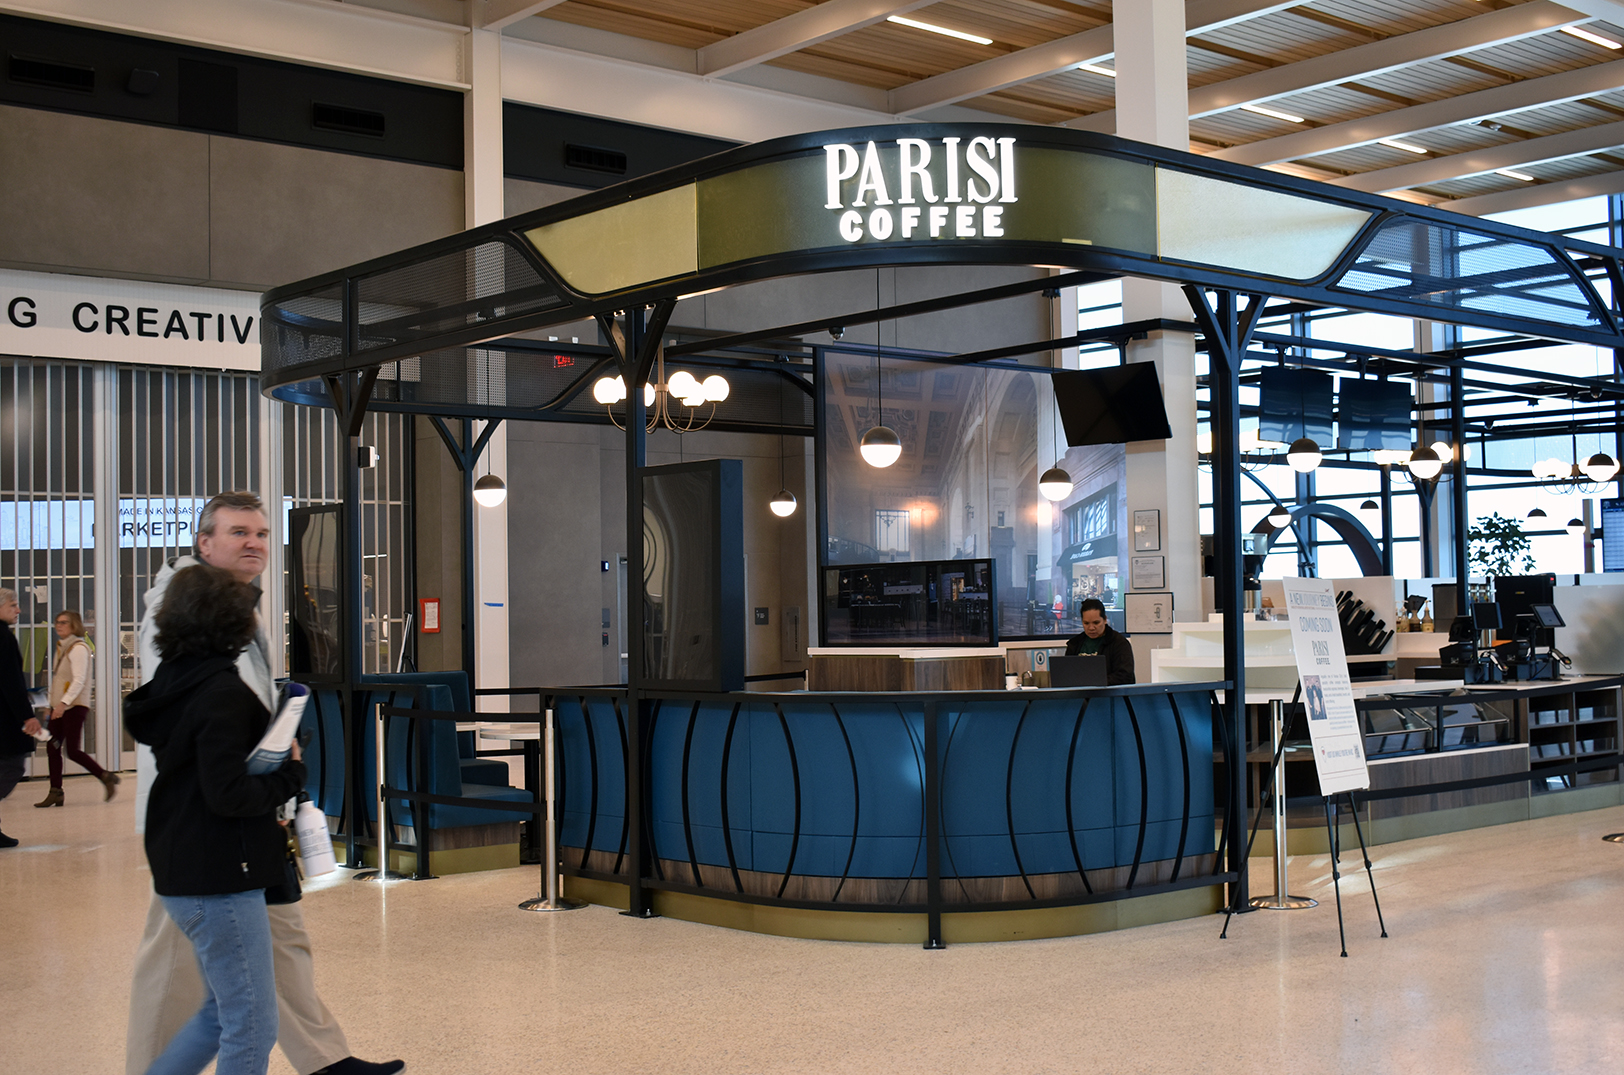 Parisi Coffee KCI New Terminal Open House 02